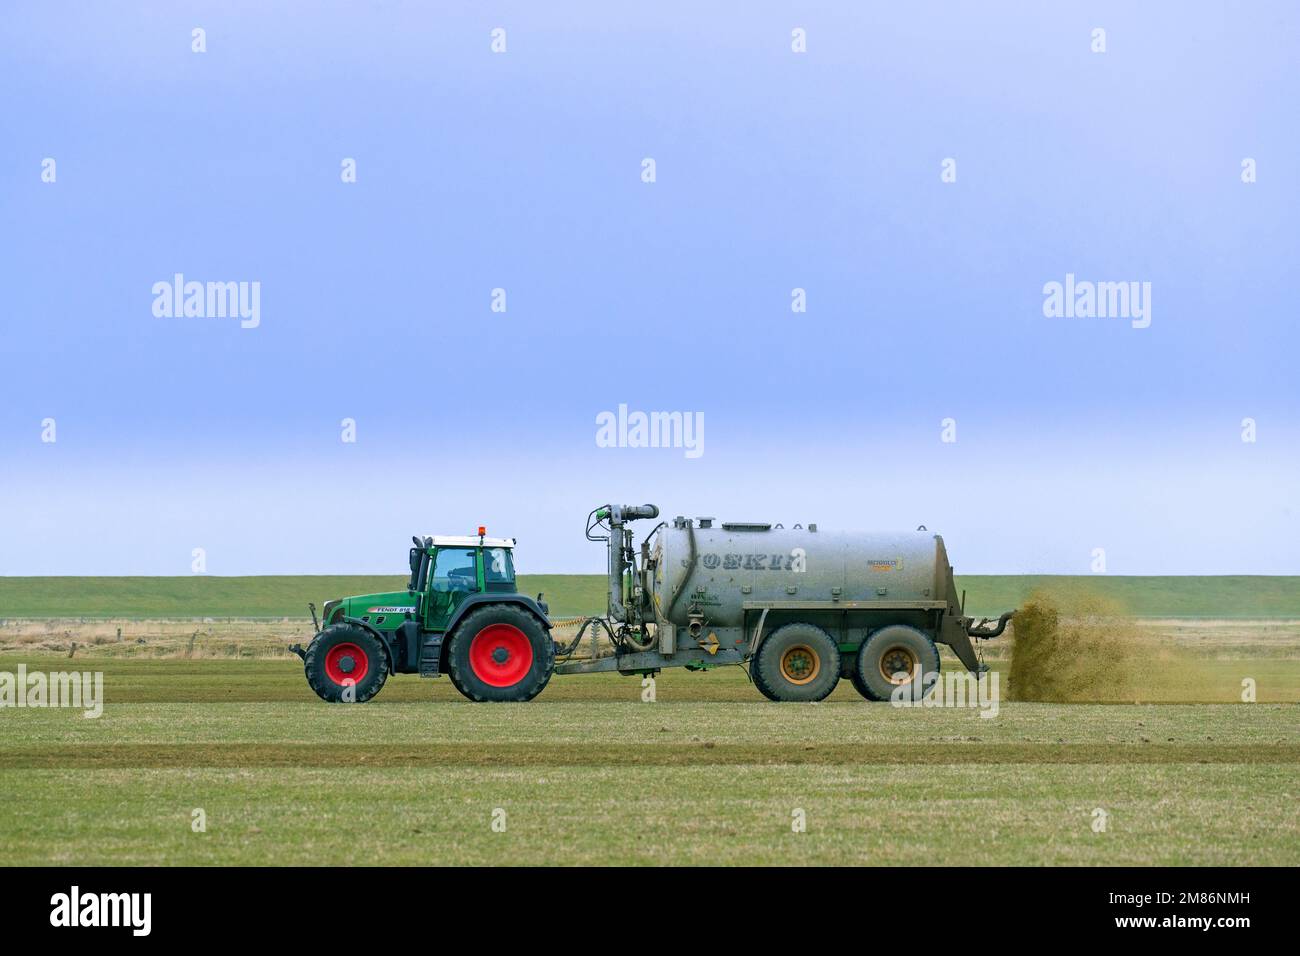 Fertiliser spreader hi-res stock photography and images - Alamy